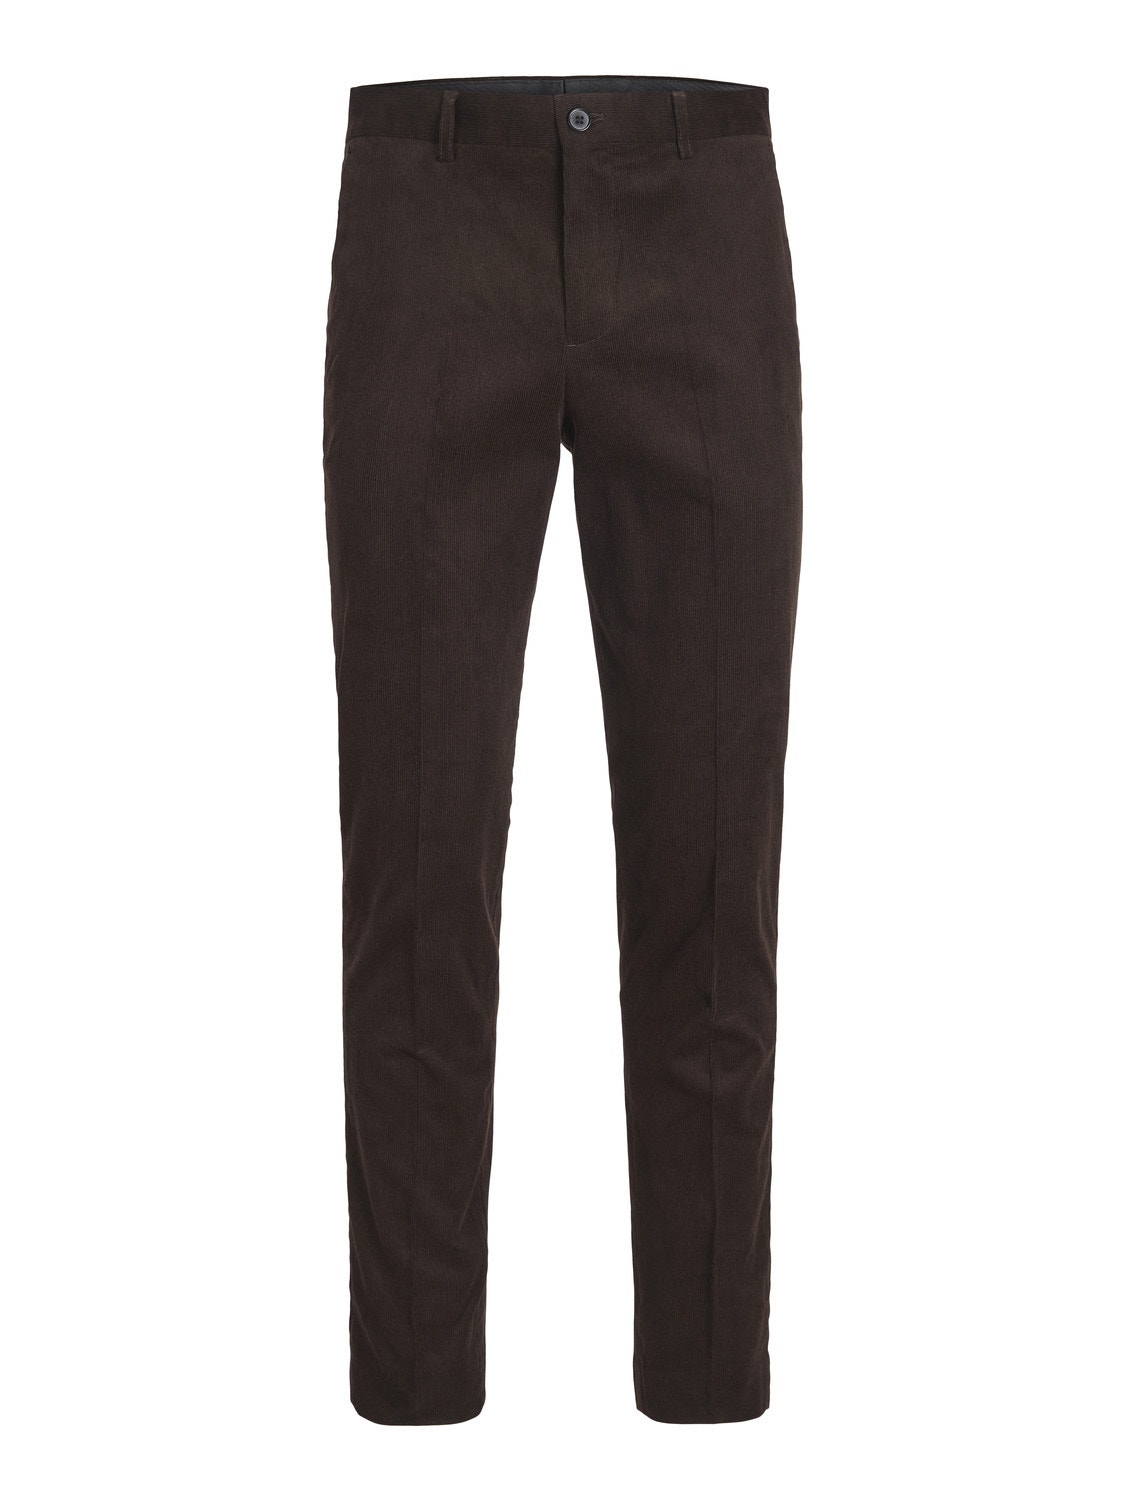 Jack & Jones JPRCORDUROY Slim Fit Tailored Trousers -Chocolate Torte - 12238698